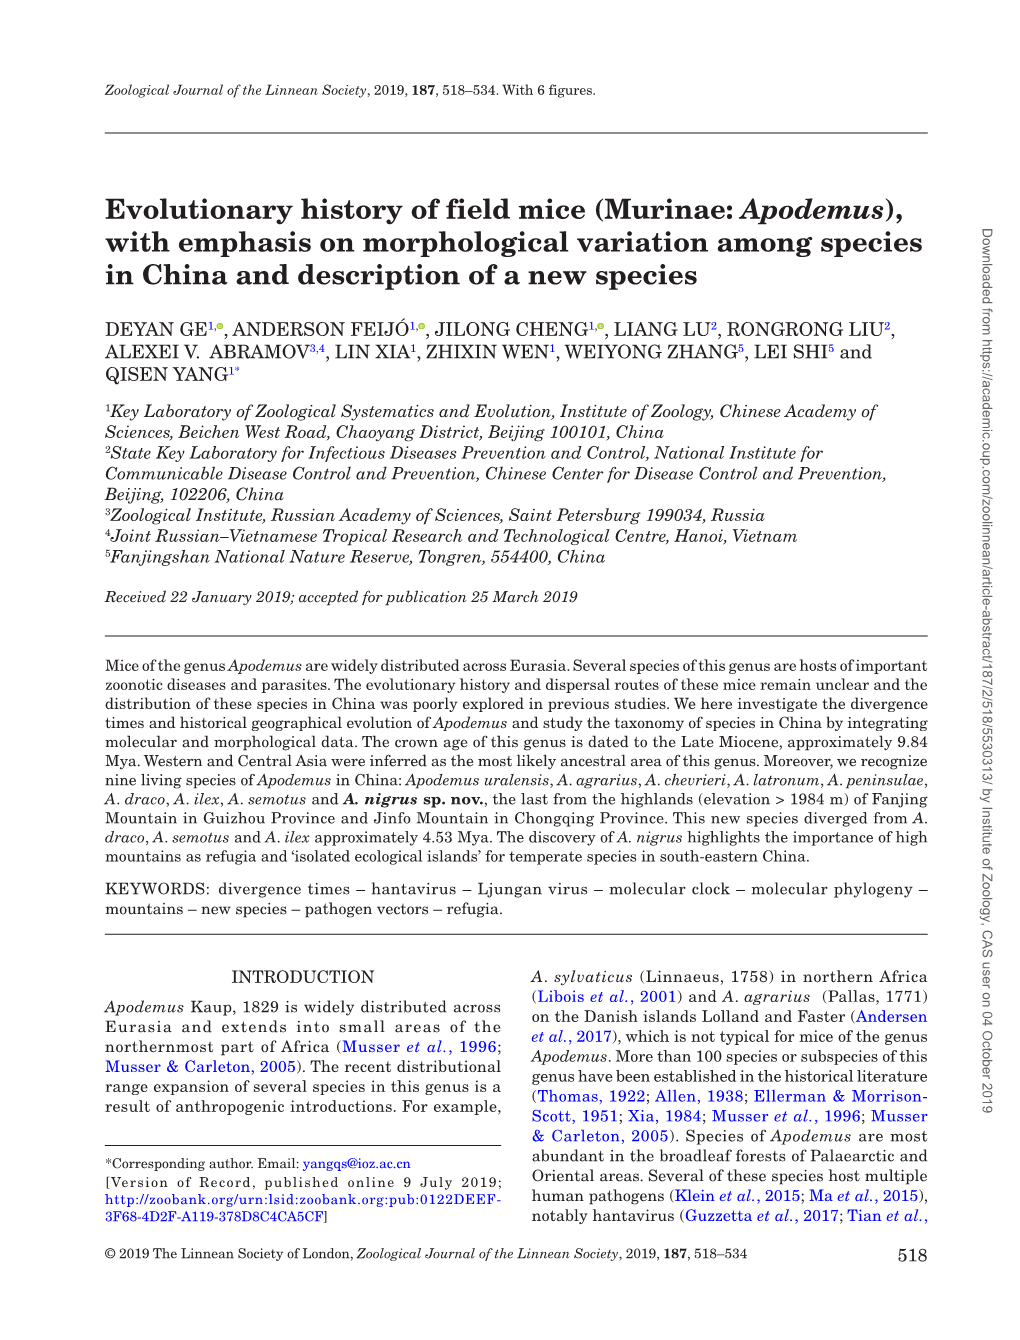 Evolutionary History of Field Mice (Murinae: Apodemus), With